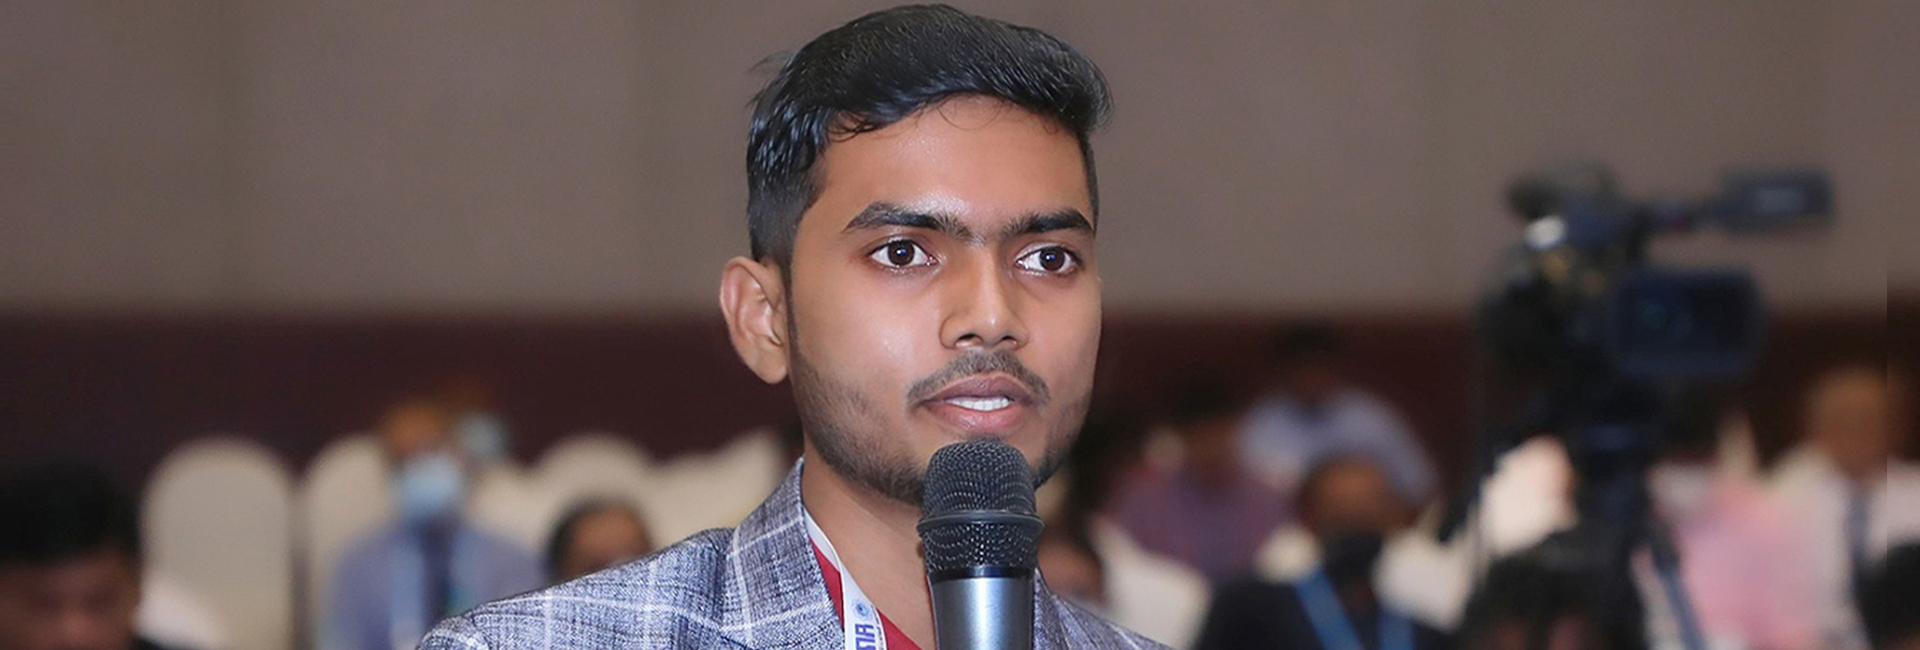 Meet Jainul Abedin, founder of India’s first reusable rocket startup